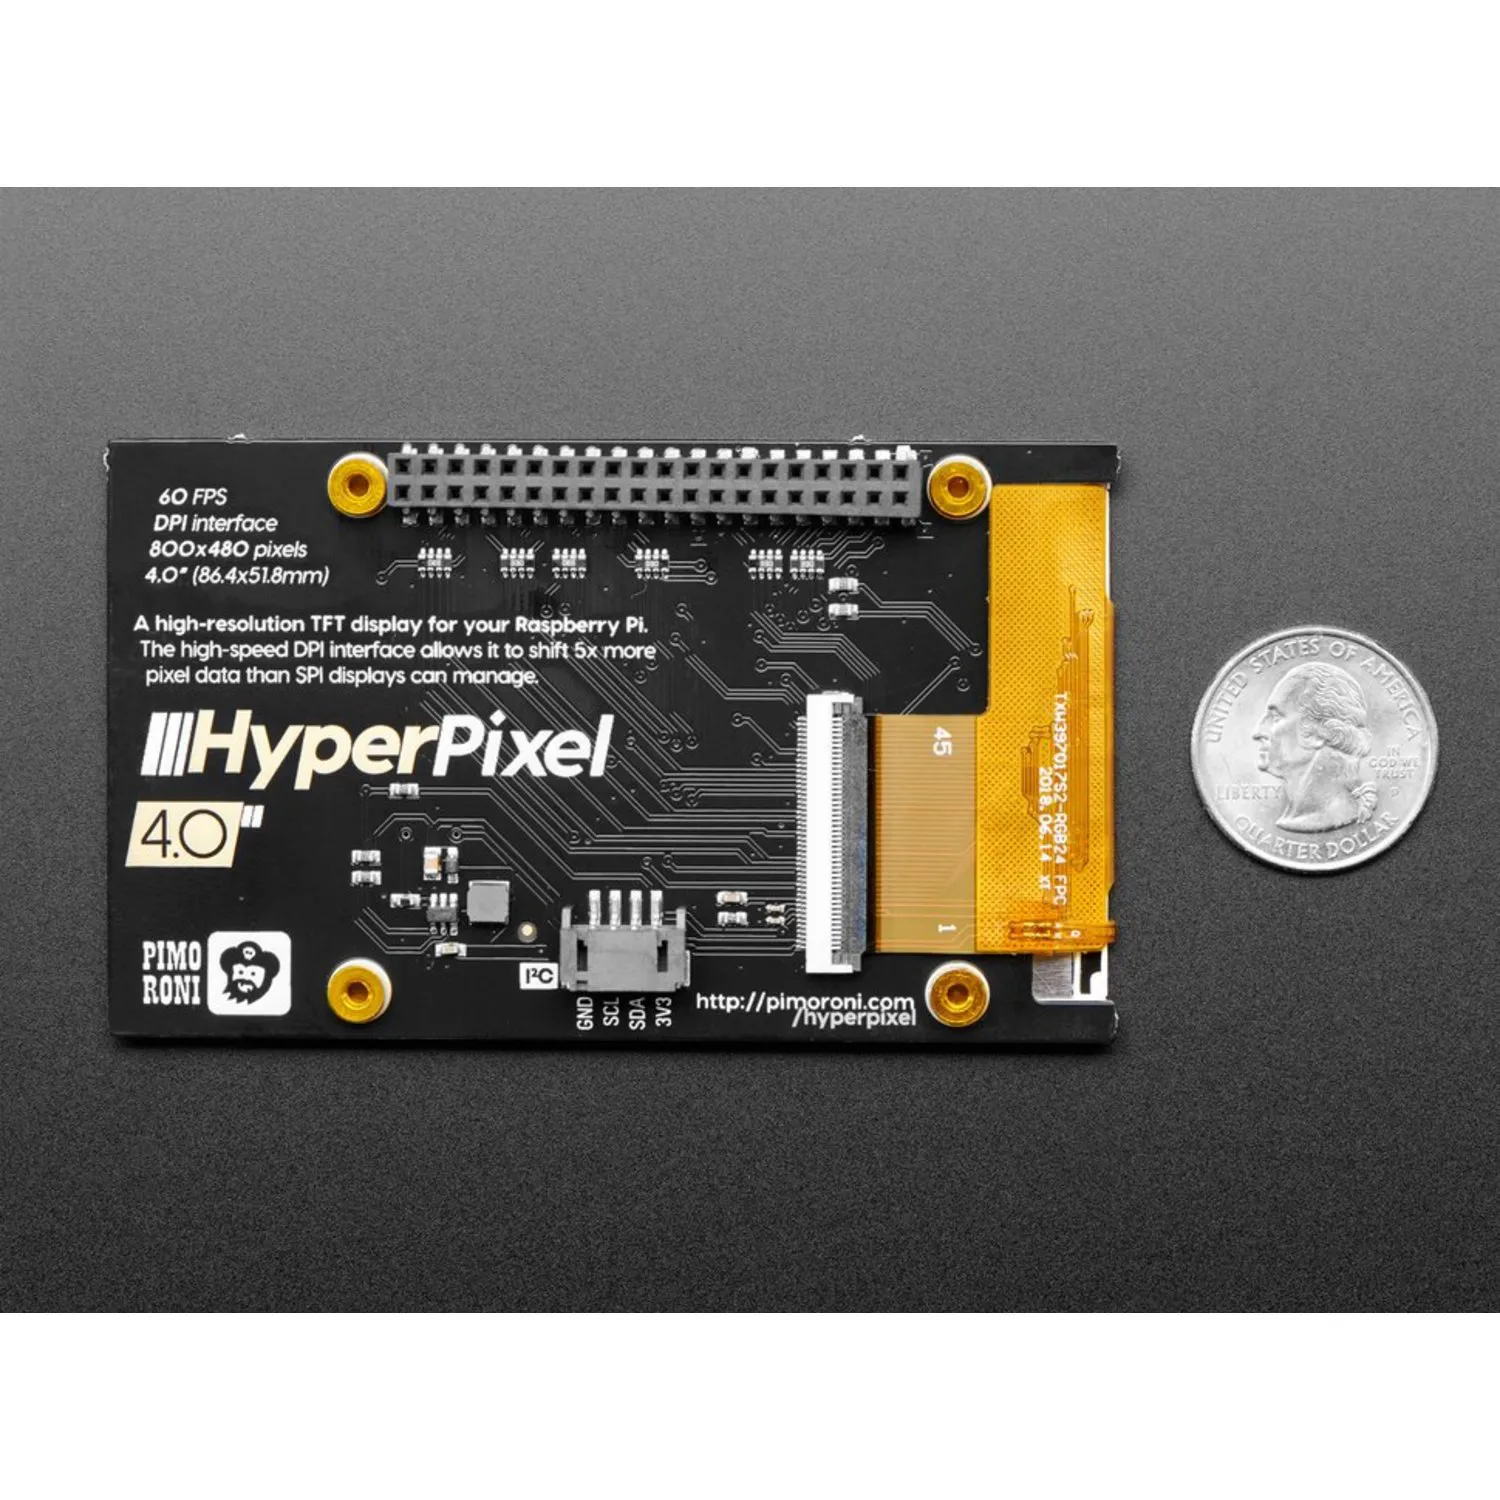 Photo of Pimoroni HyperPixel - 4.0 Hi-Res Display for Raspberry Pi - Non-Touch